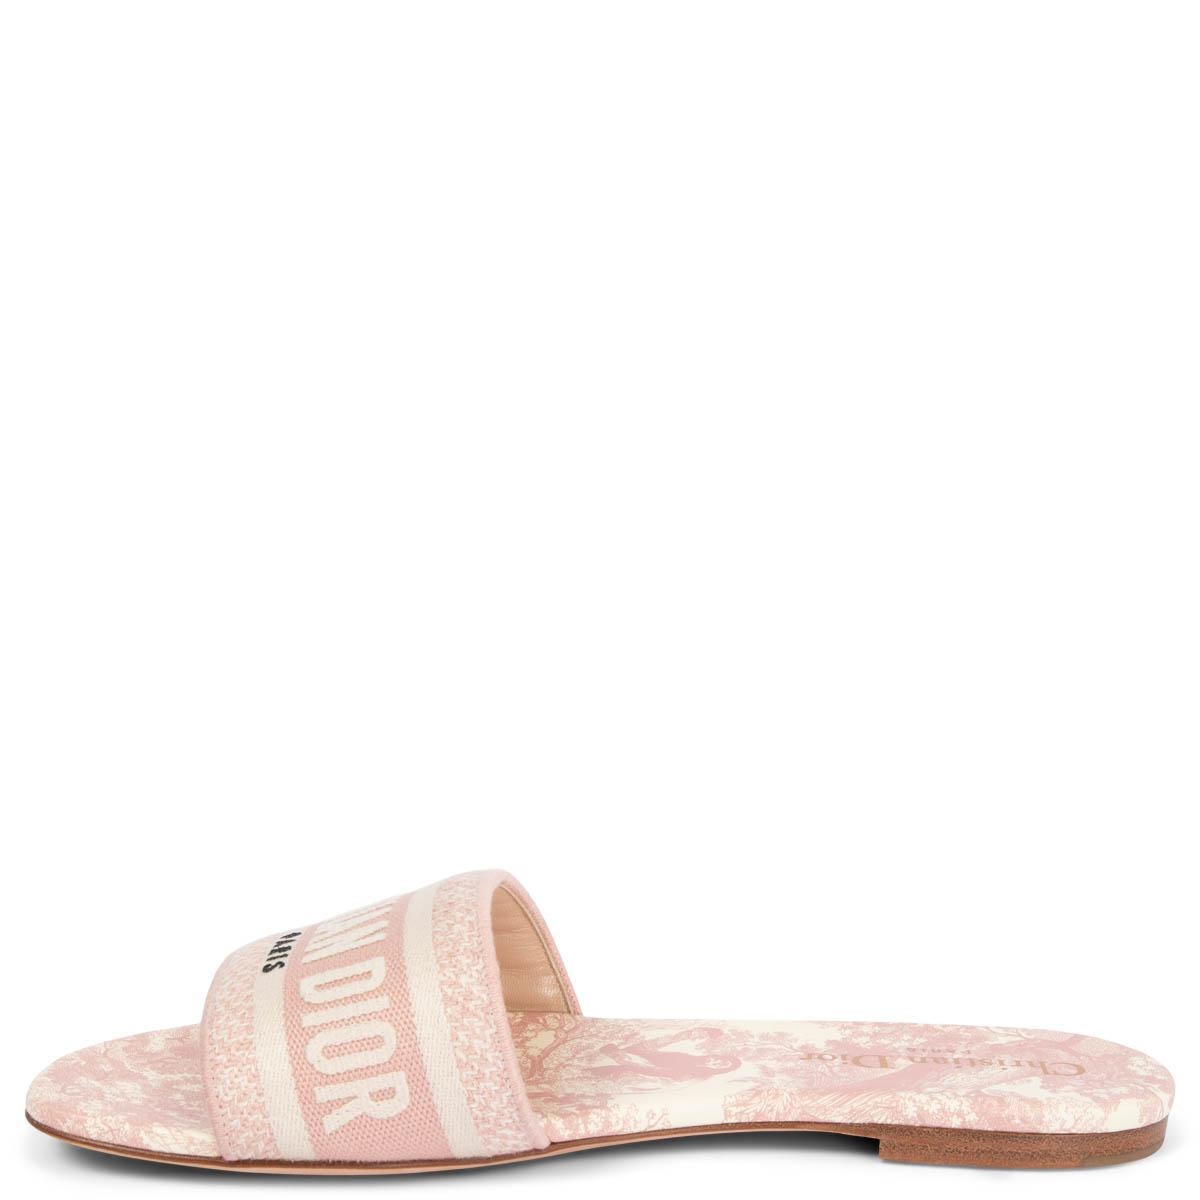 christian dior sandals pink